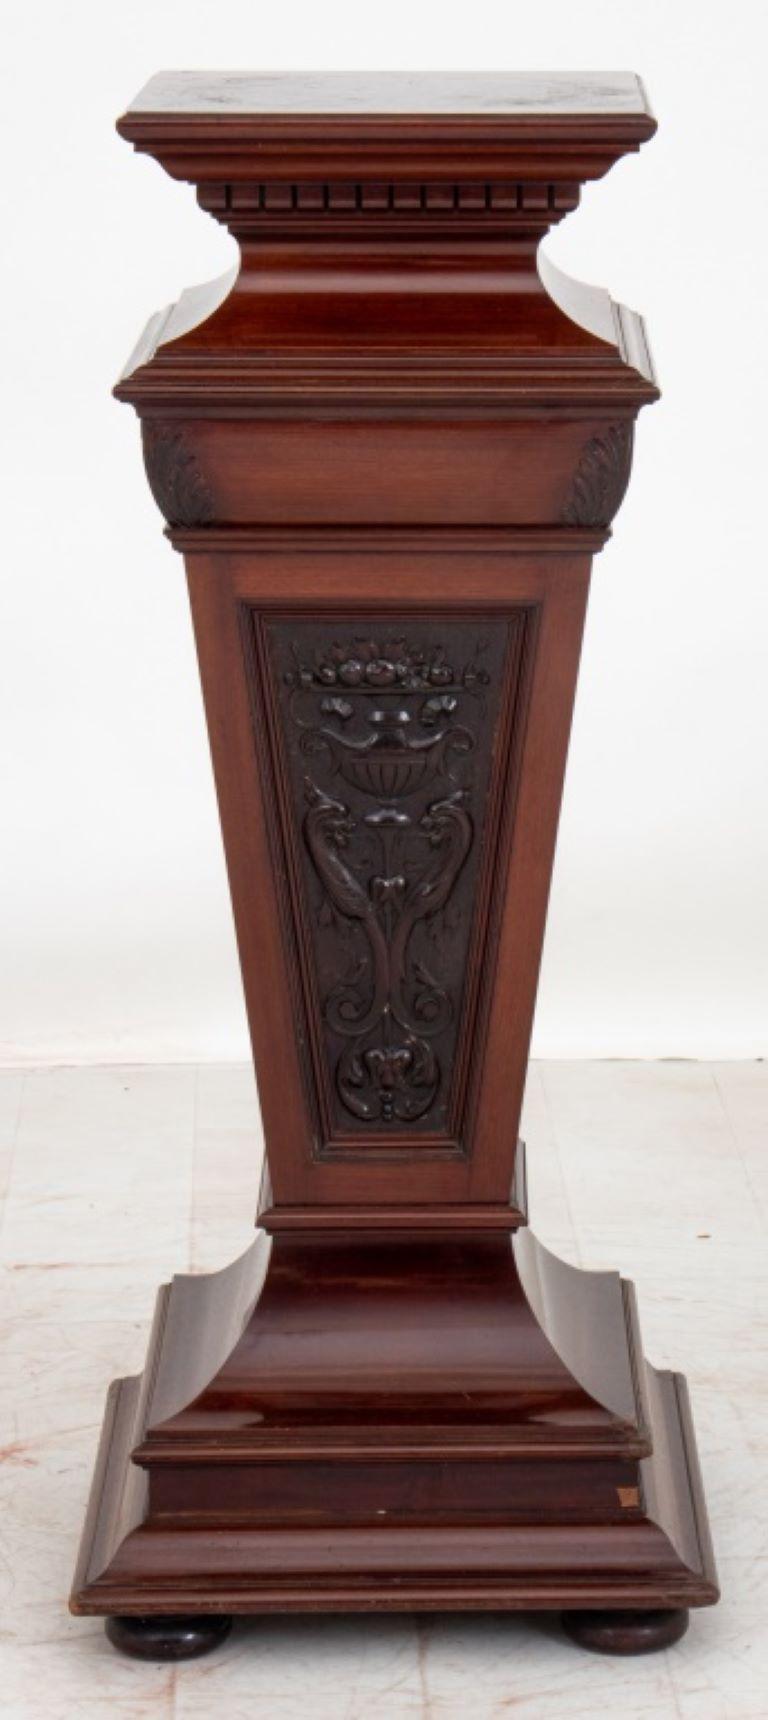 Victorian Style Renaissance revival mahogany pedestal, 20th C.

Dealer: S138XX